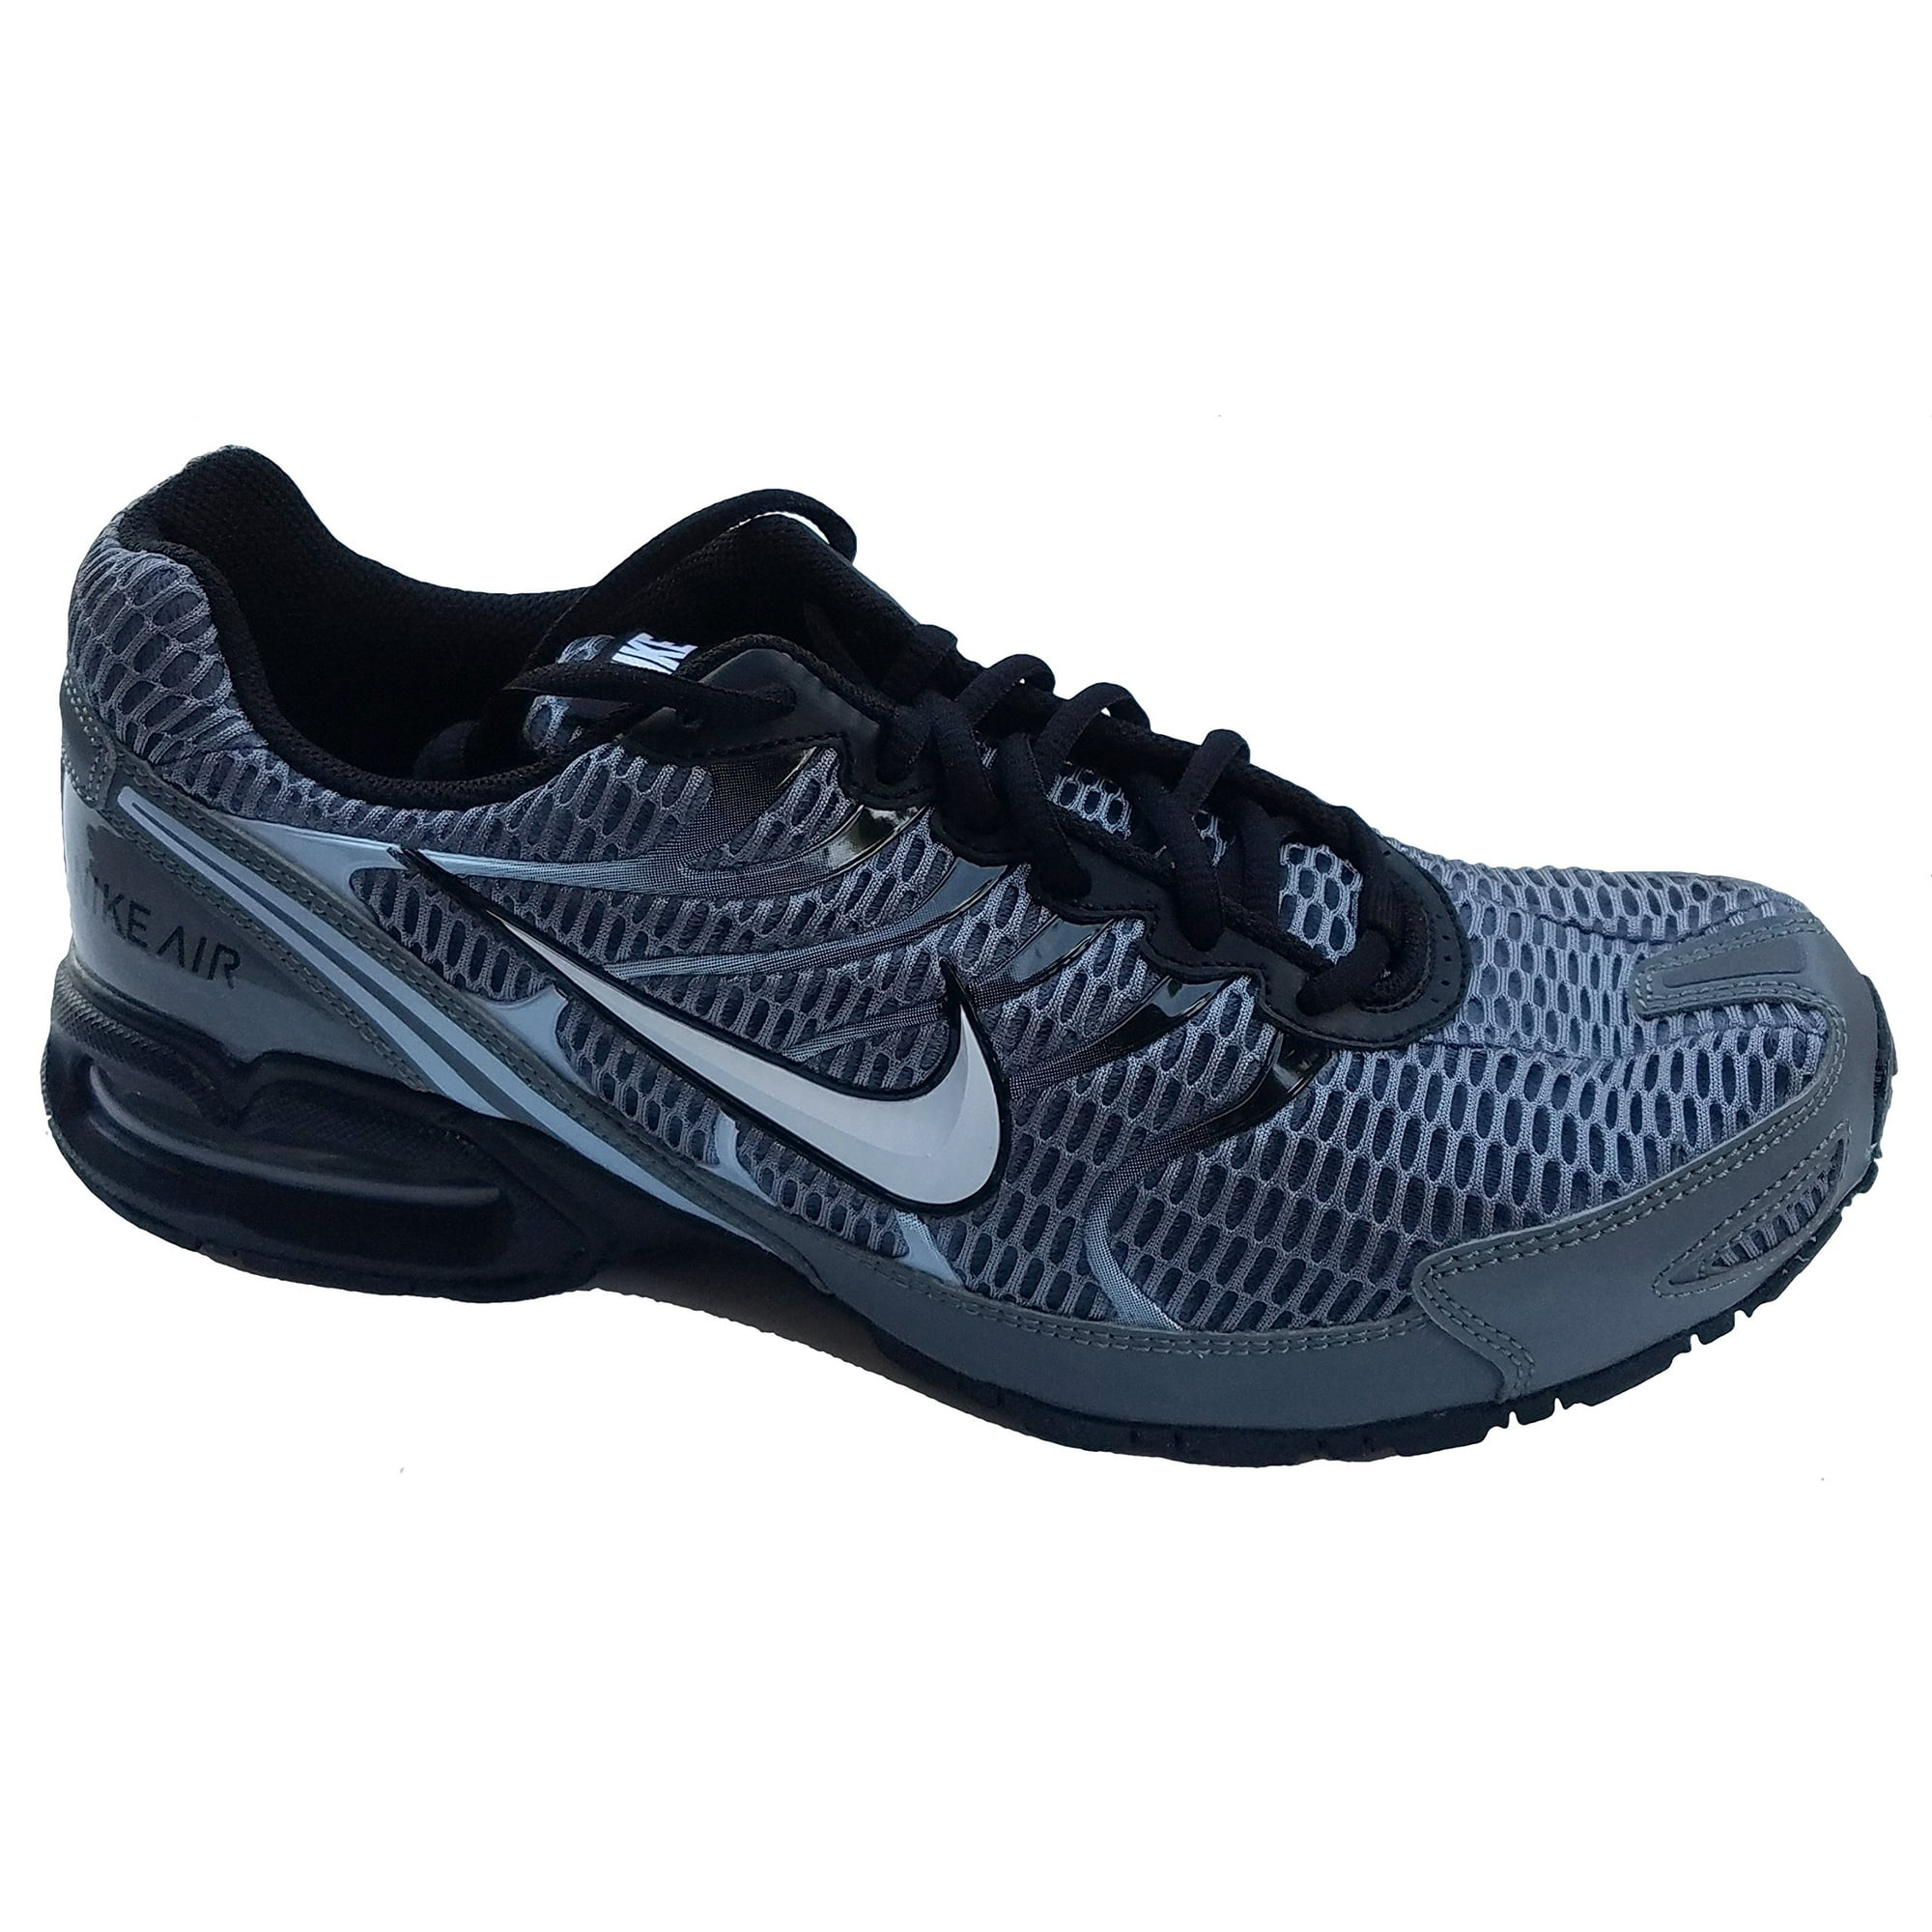 tøve Hop ind En nat Men's Nike Air Max Torch 4 Running Shoe Cool Grey/White/Black/Pure Platinum  Size 11.5 M US - Walmart.com